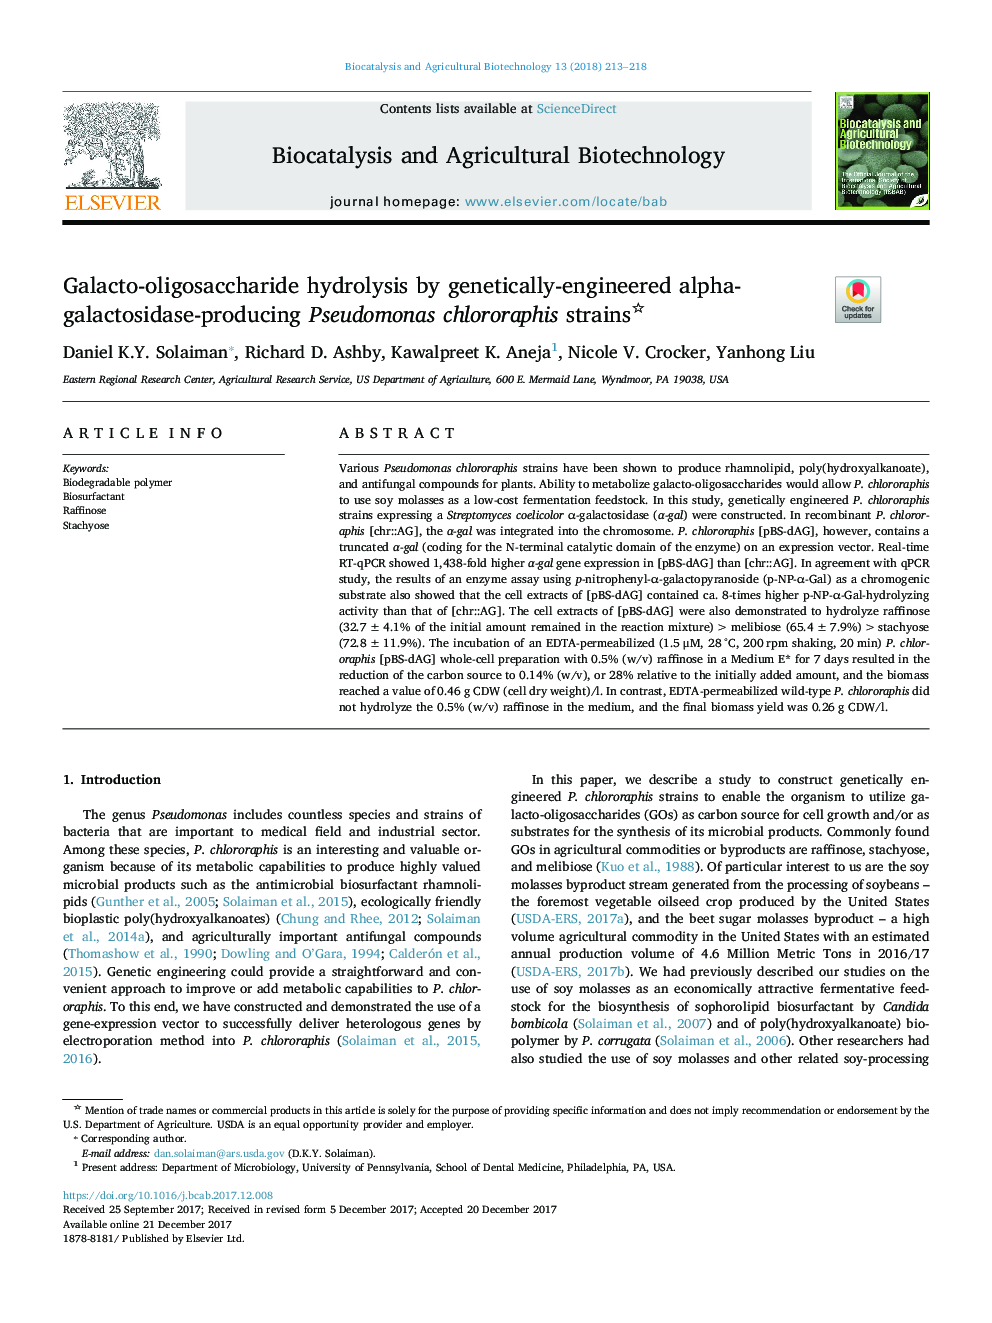 Galacto-oligosaccharide hydrolysis by genetically-engineered alpha-galactosidase-producing Pseudomonas chlororaphis strains